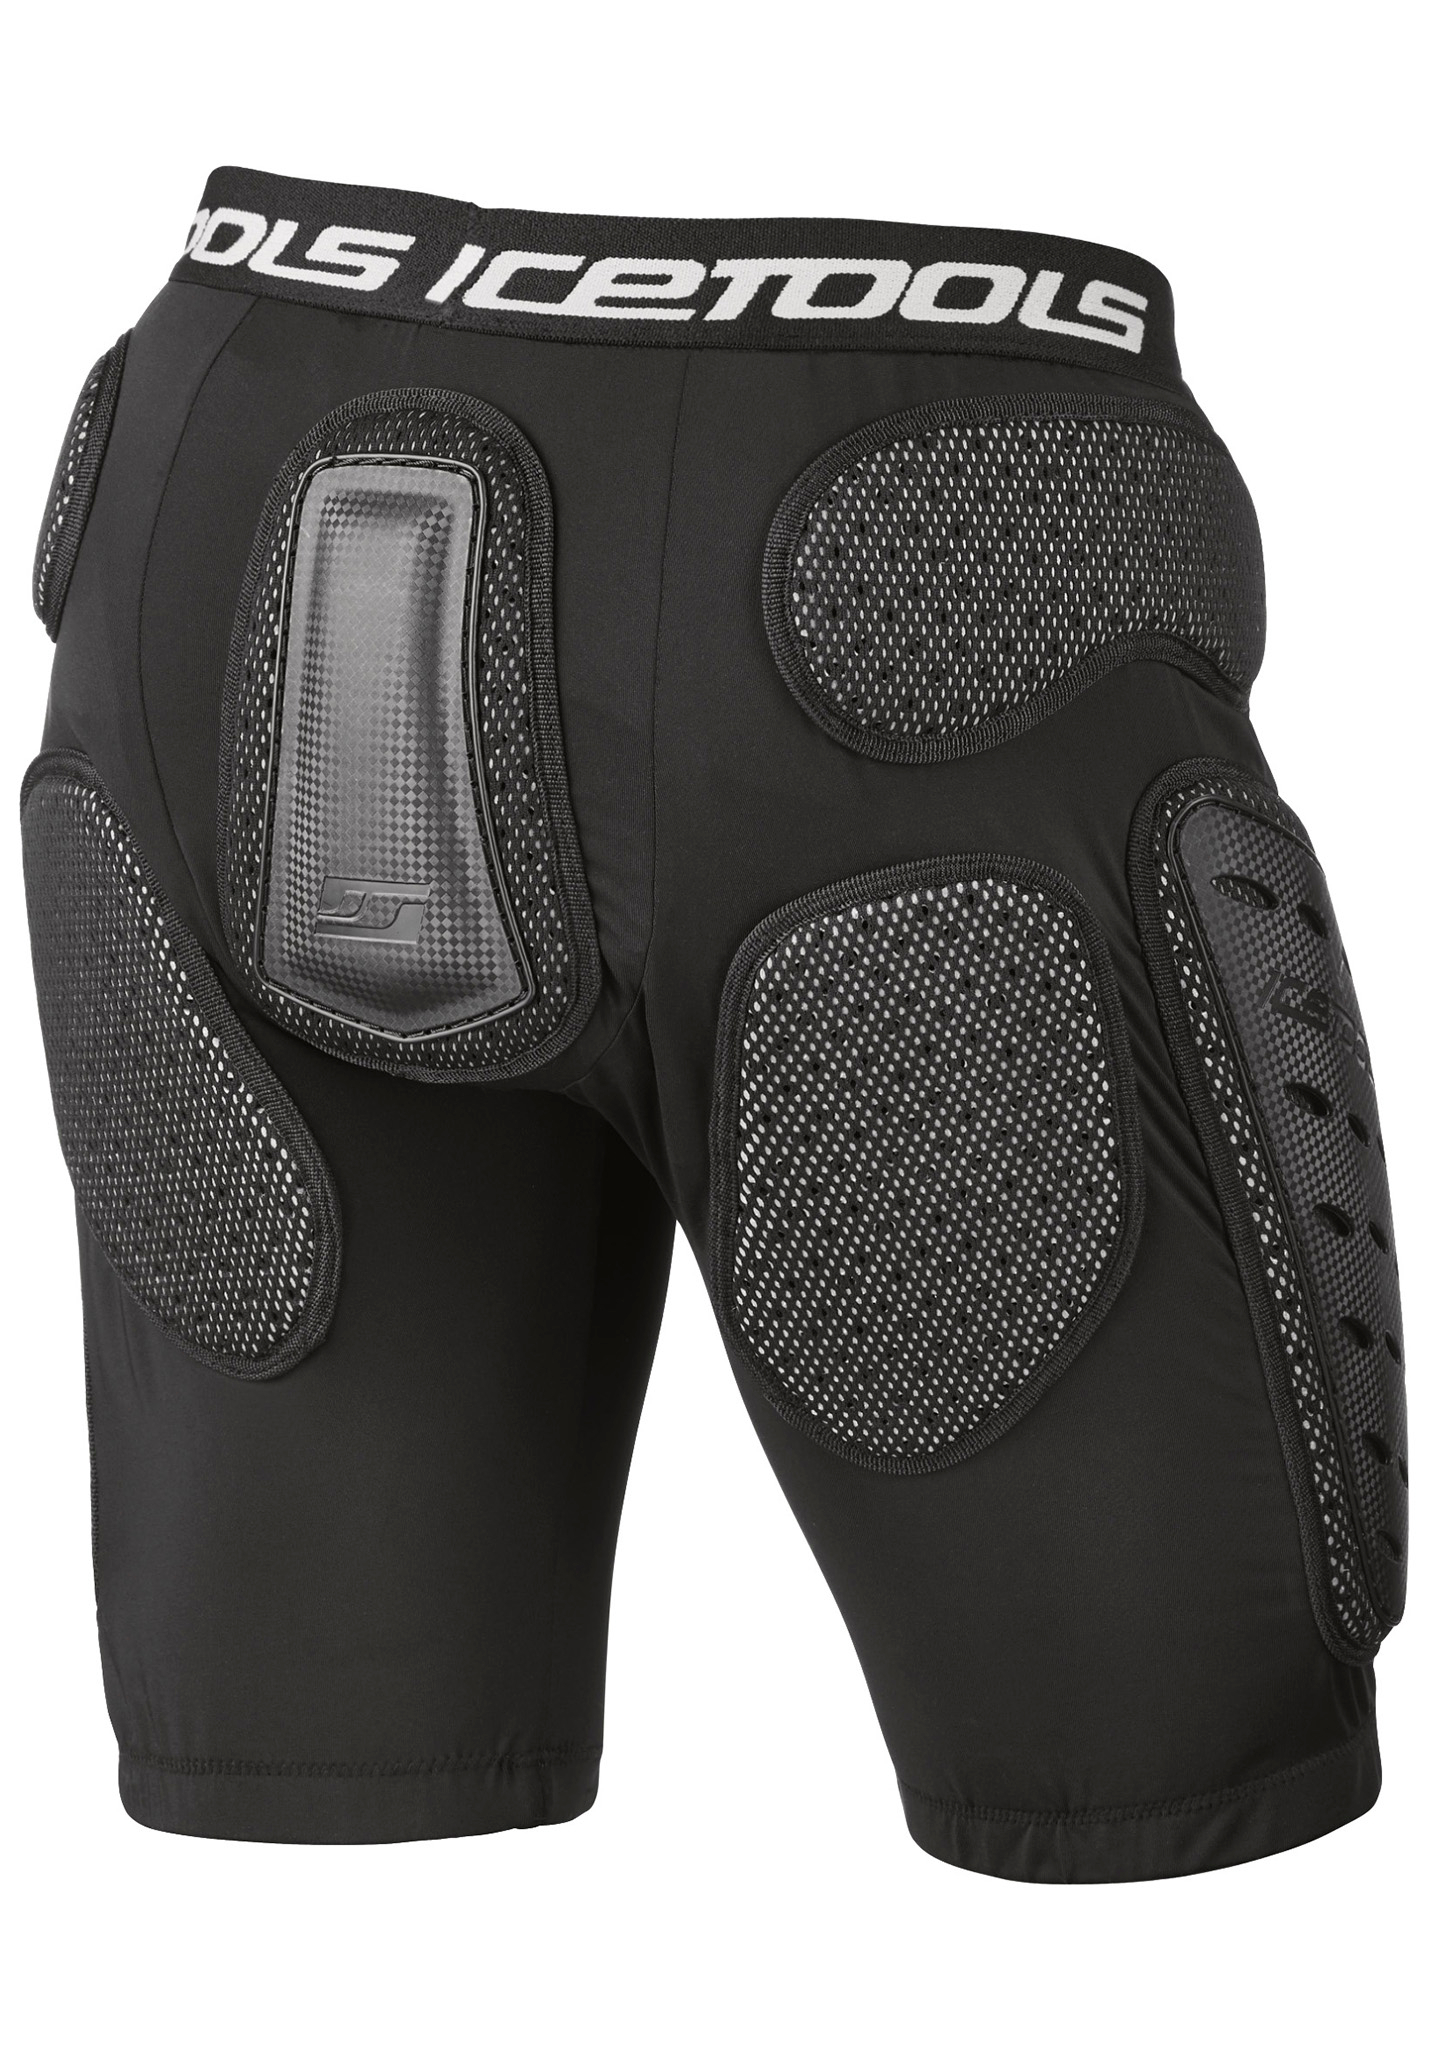 Icetools Armor Skate Protektoren black XL